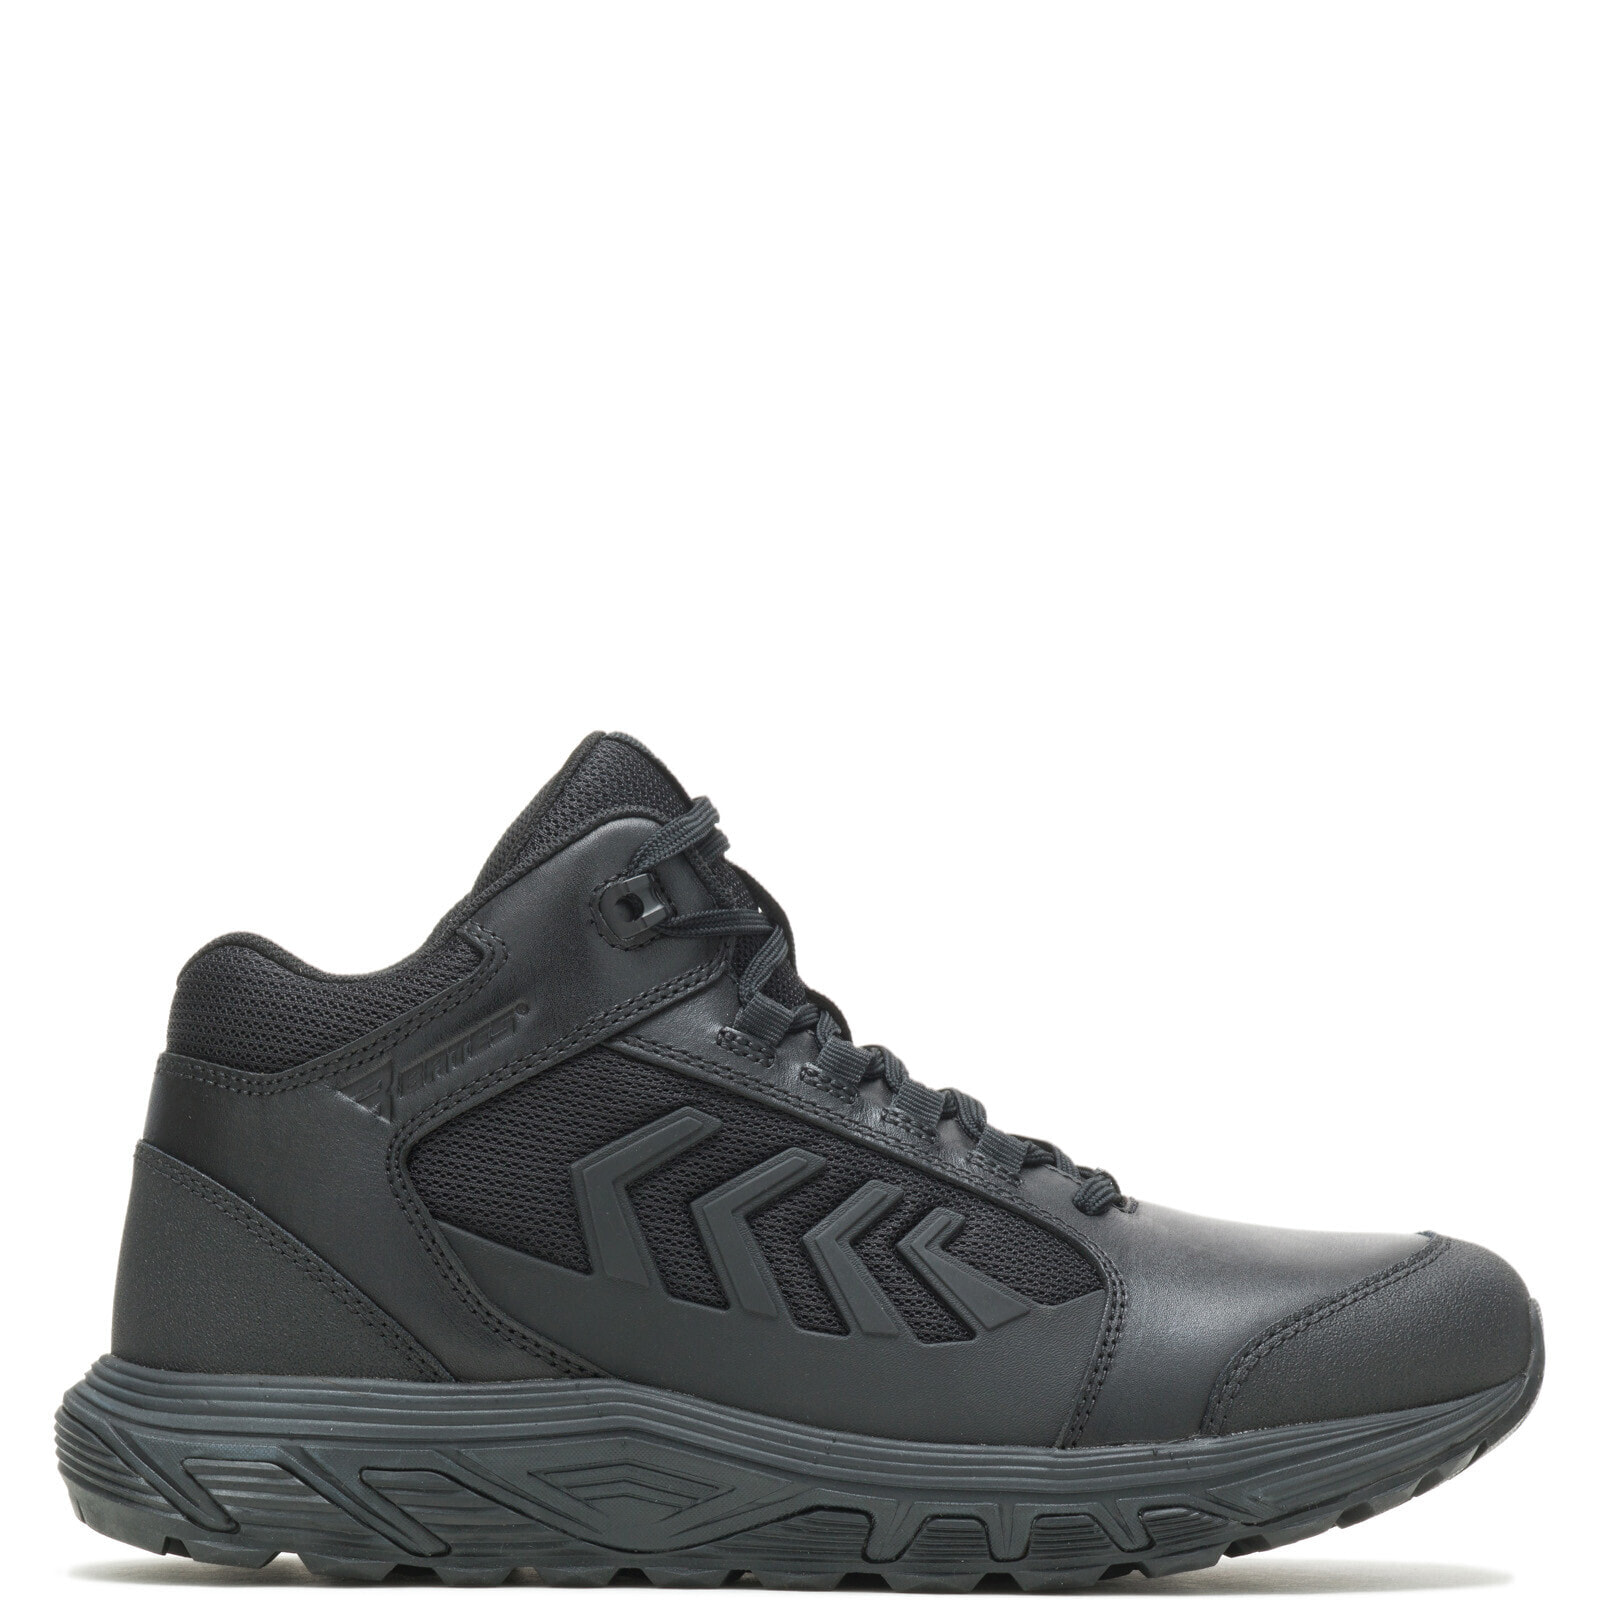 Bates Rush Shield Mid Vent E01047 Mens Black Leather Athletic Tactical Shoes